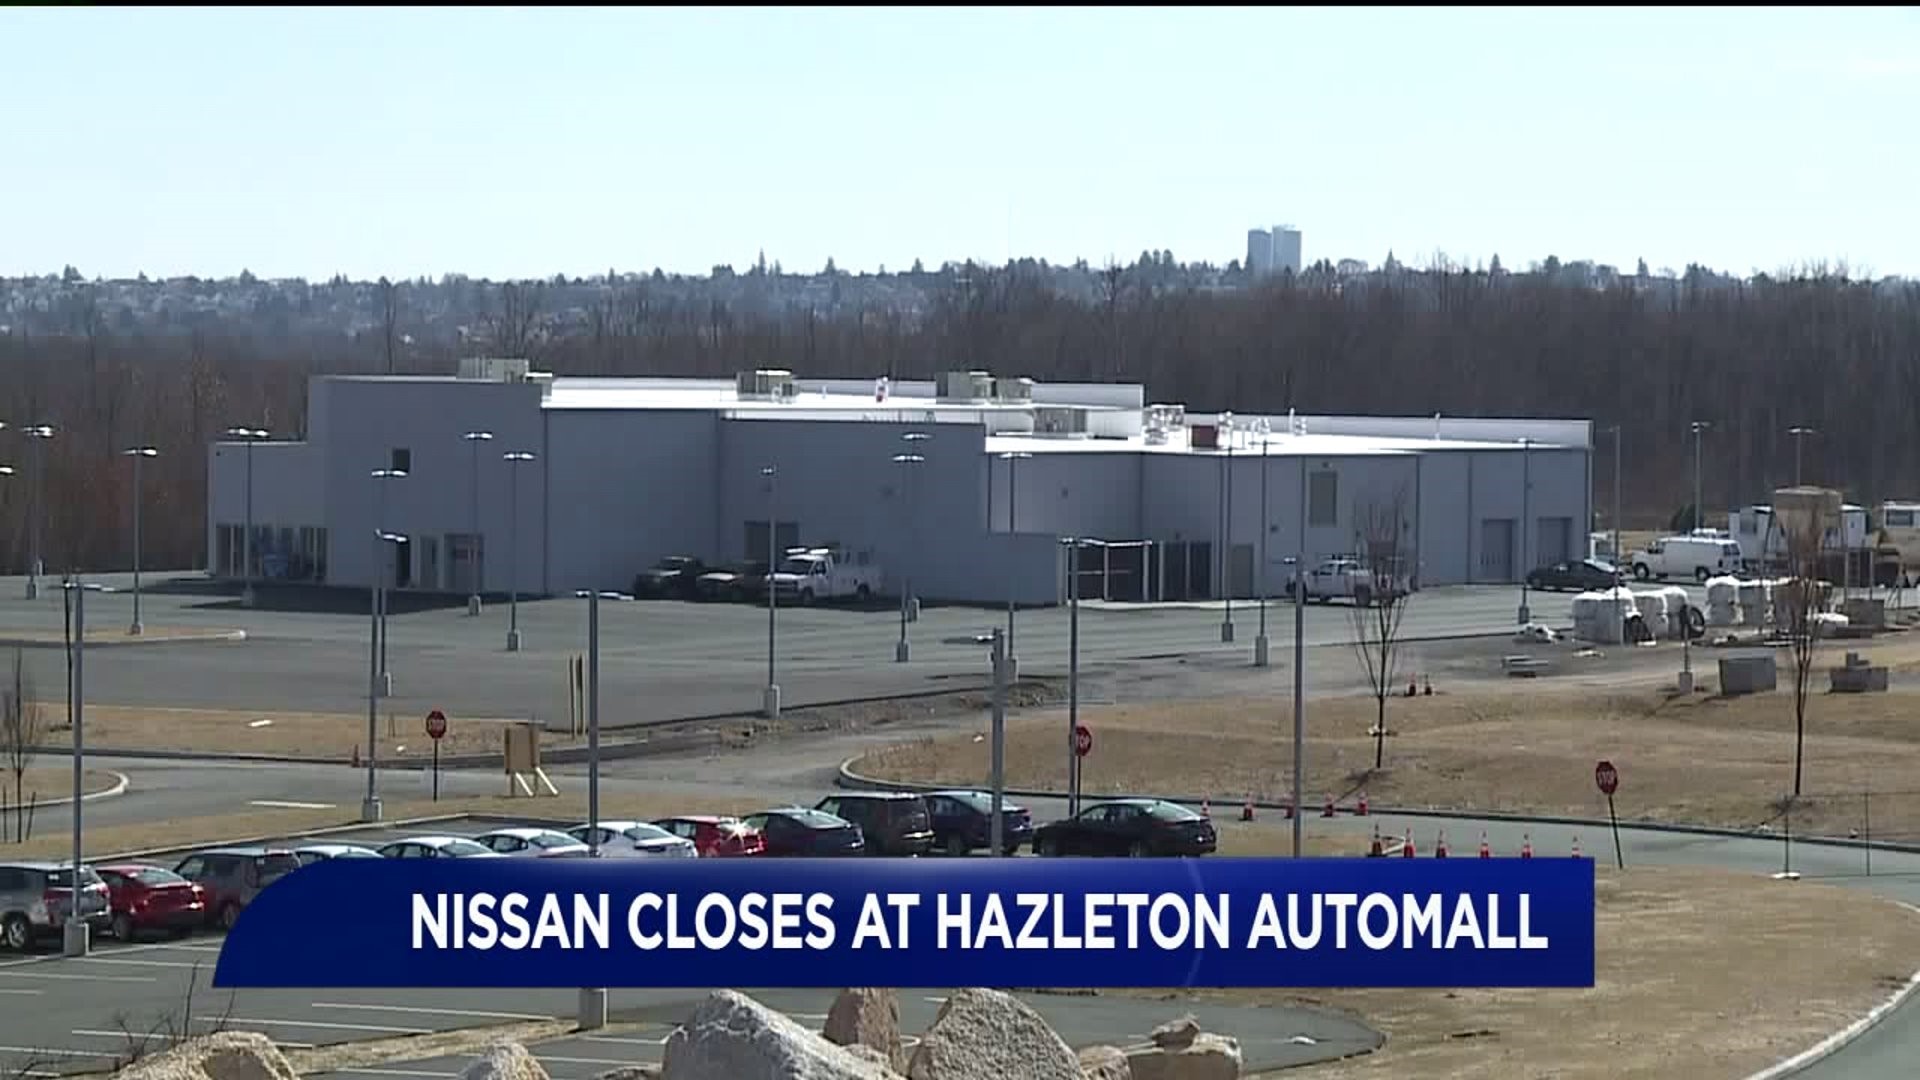 Nissan Dealership Closes at Hazleton Automall